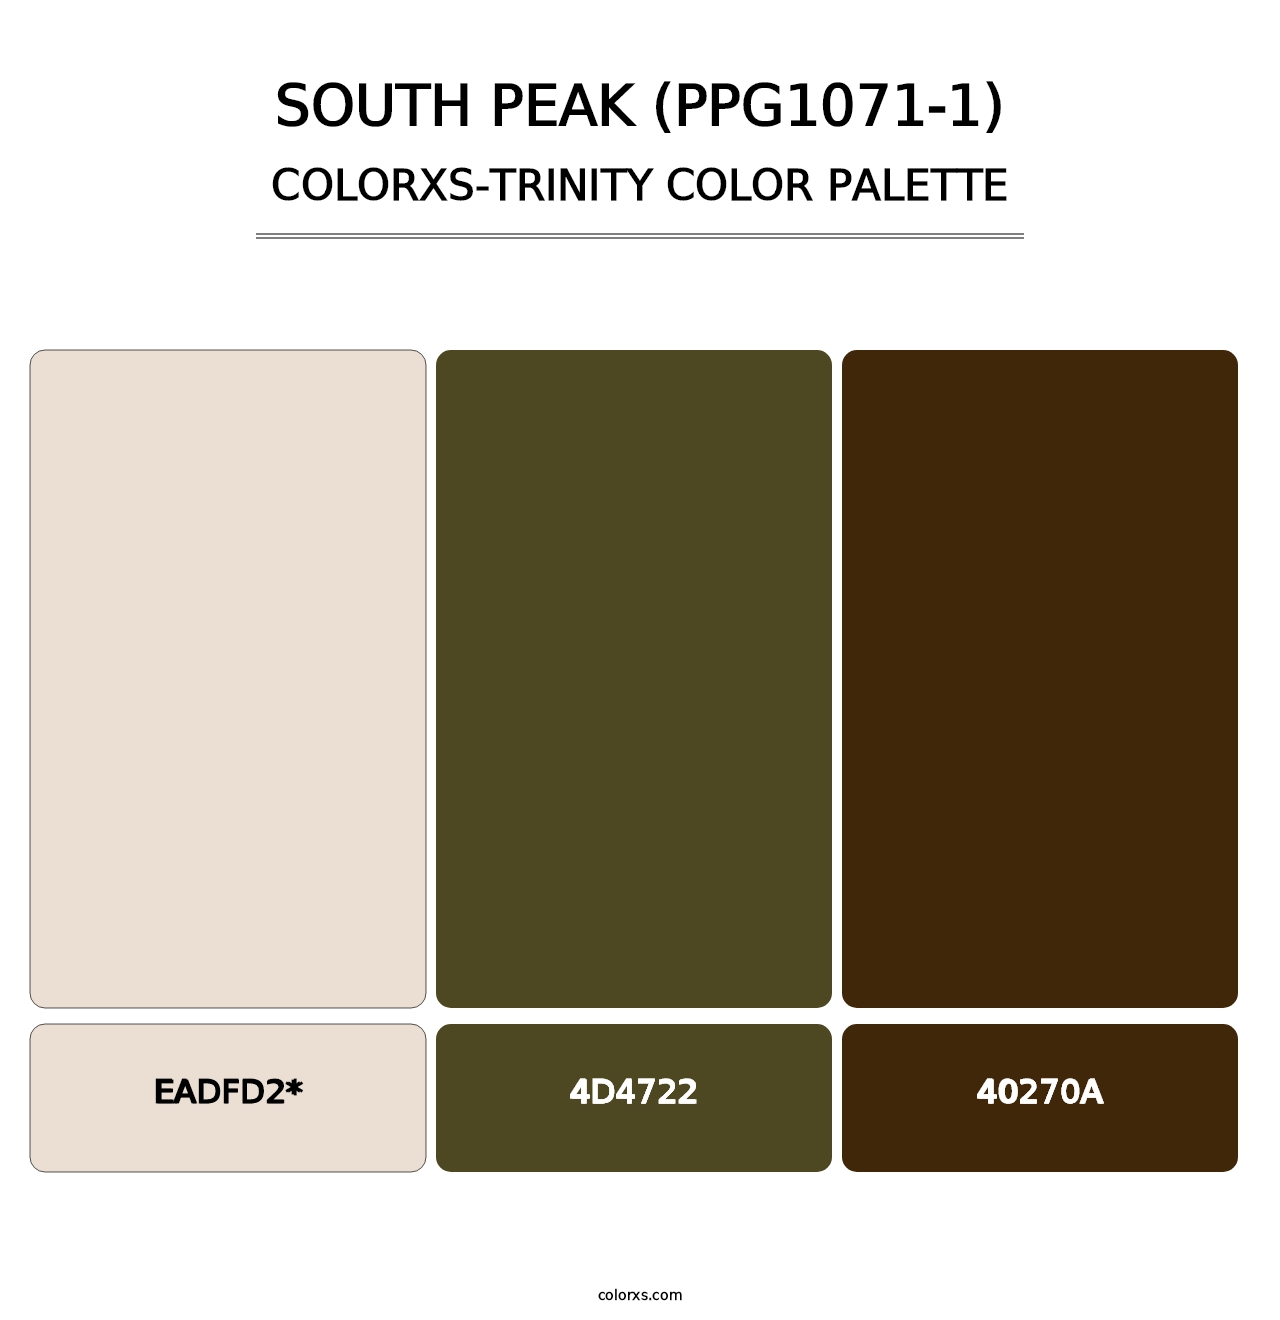 South Peak (PPG1071-1) - Colorxs Trinity Palette